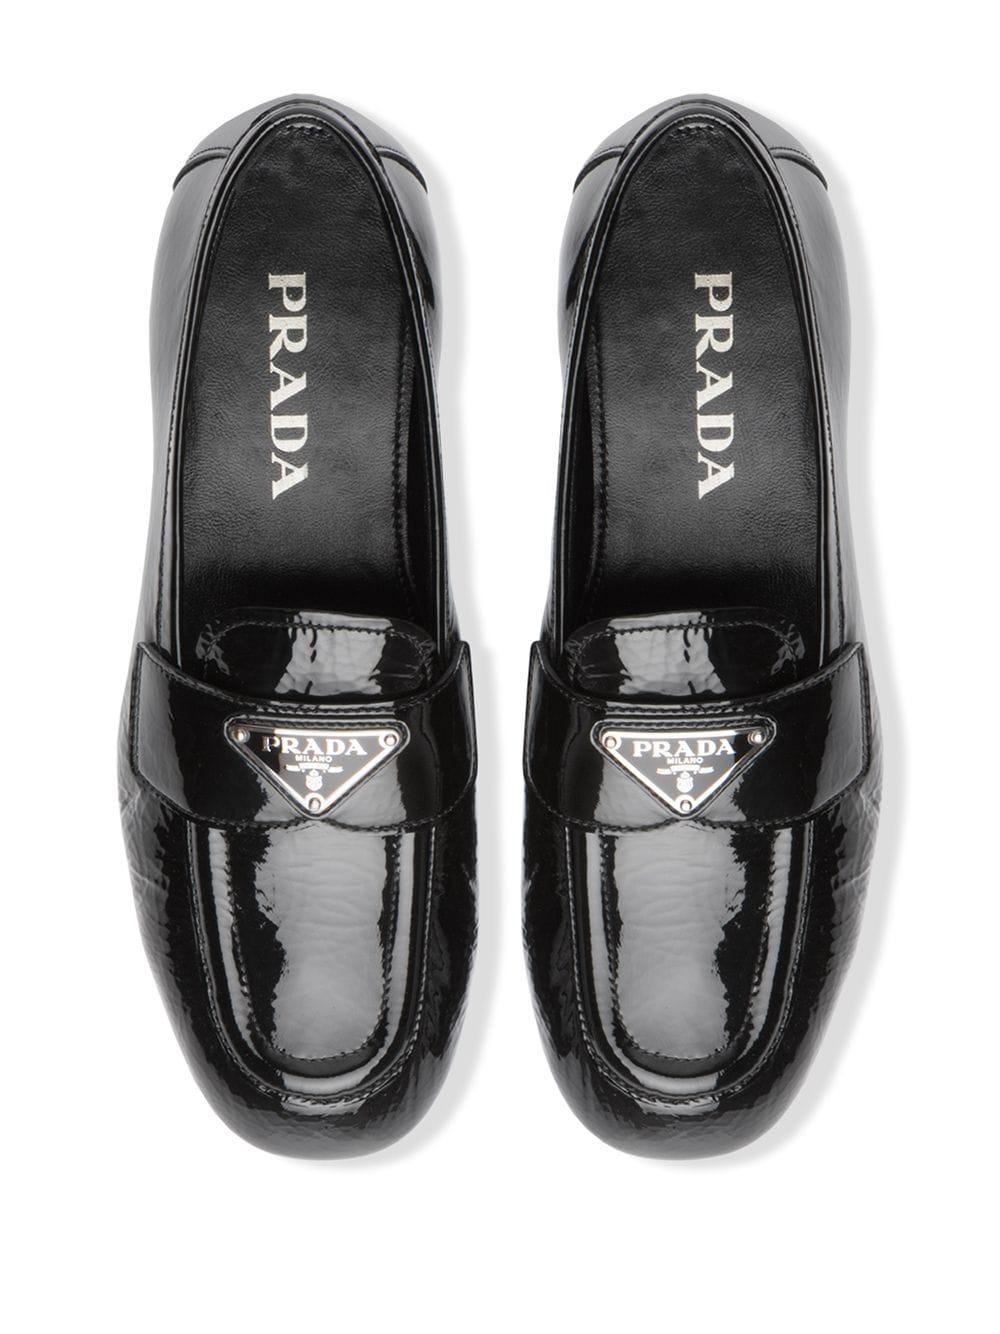 Prada Naplak Leather Loafers in Black | Lyst